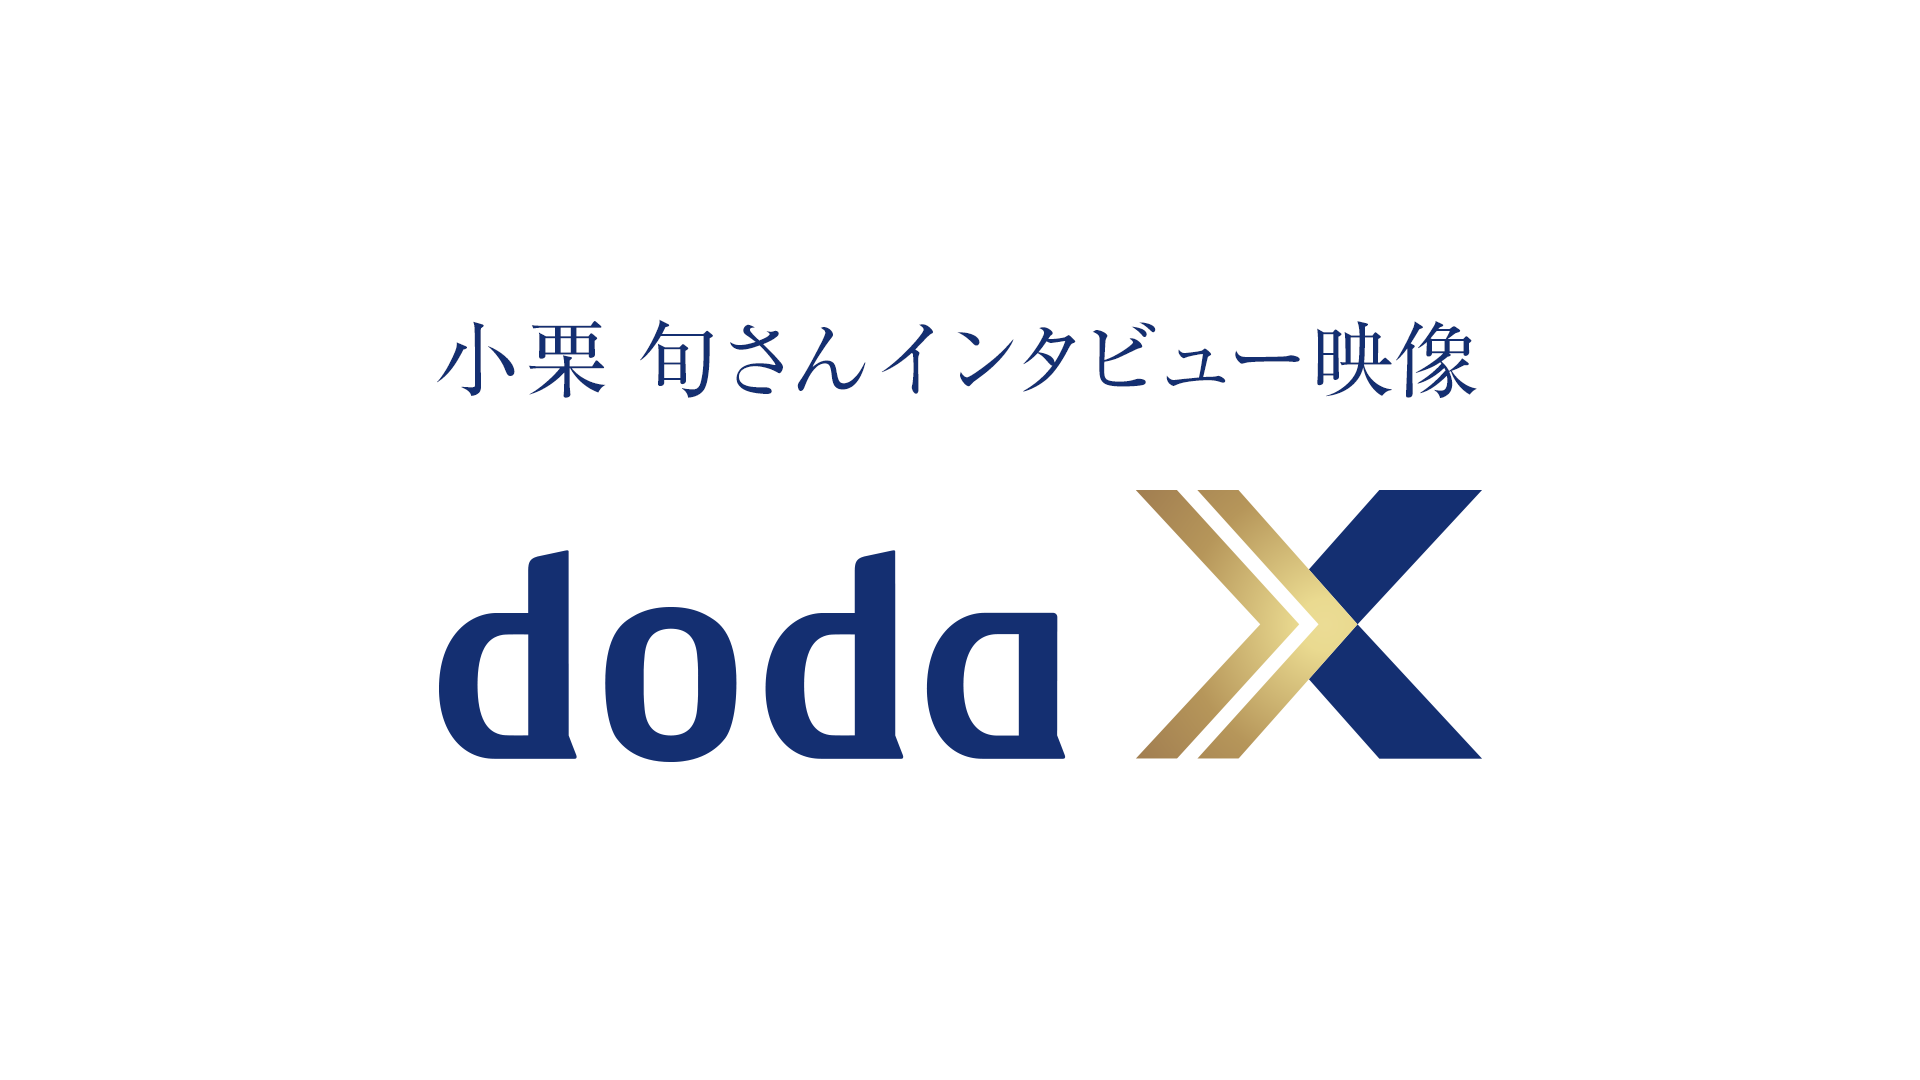 doda X「小栗 旬さんインタビュー映像」